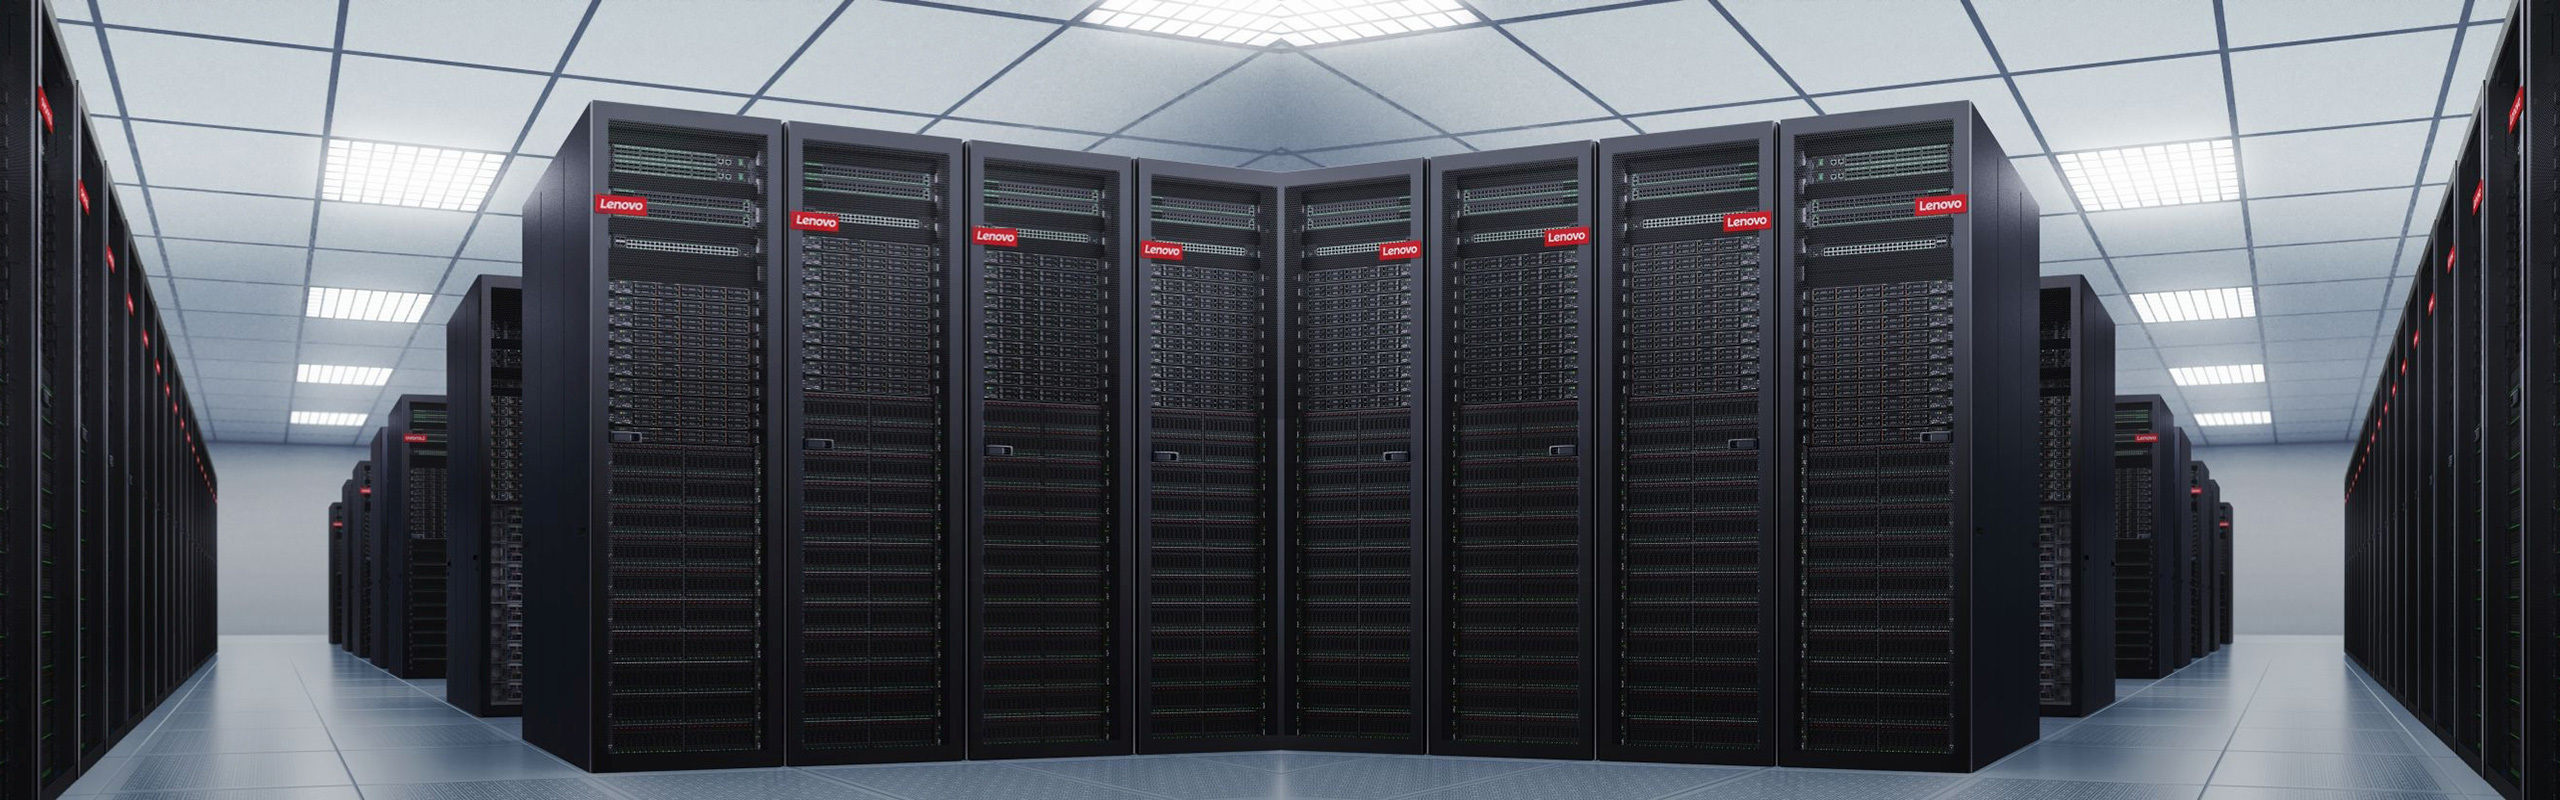 Snelius, National Supercomputer - Background

